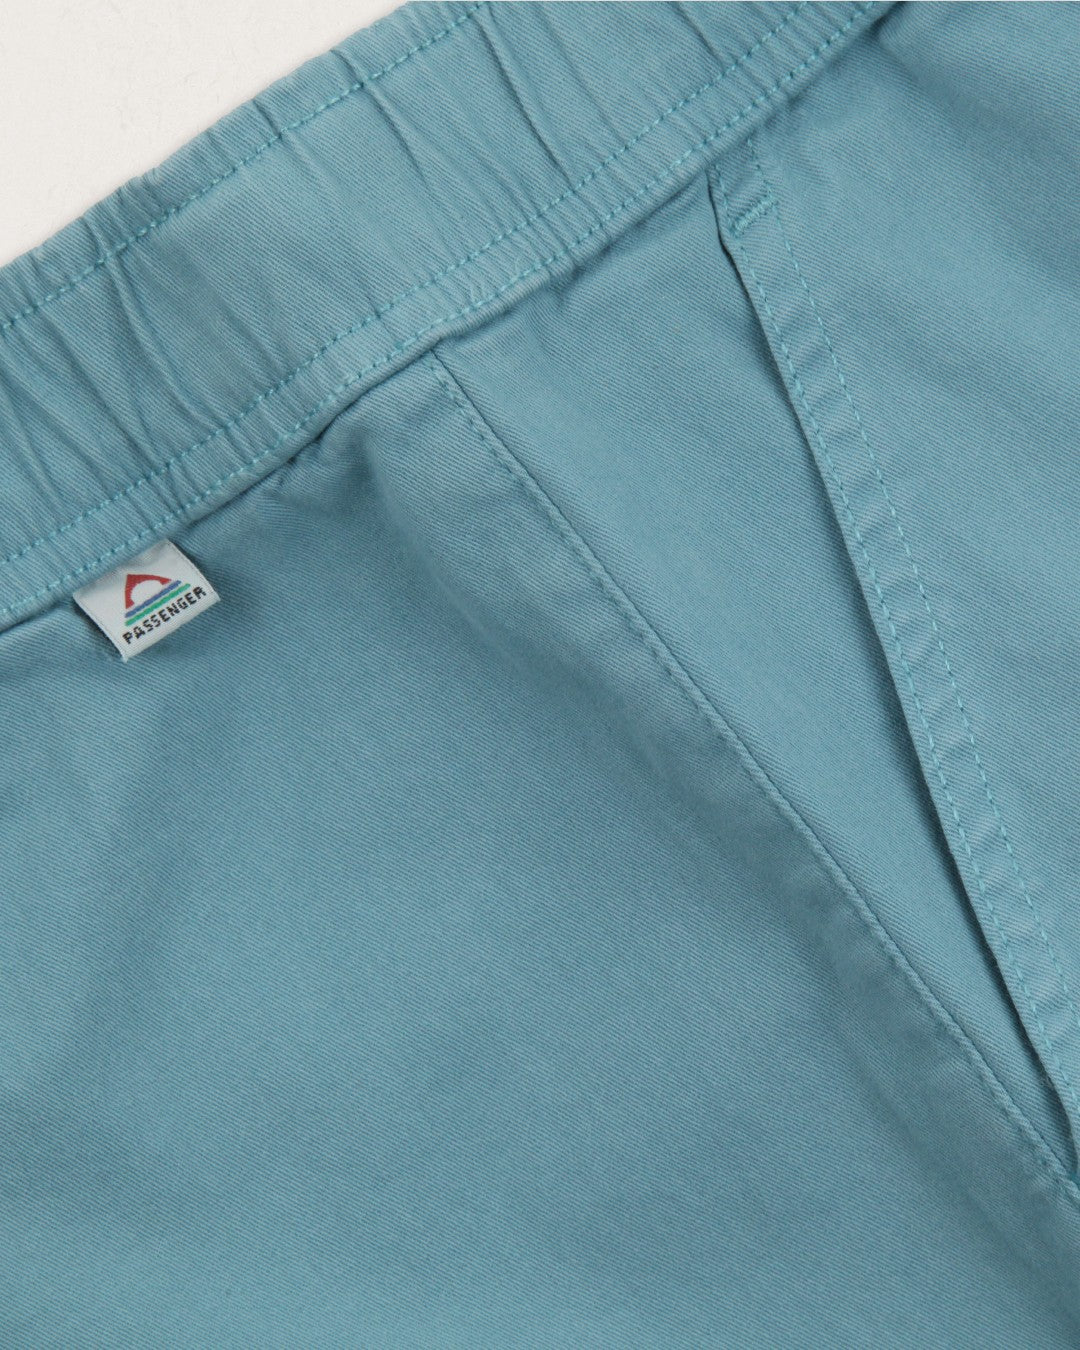 Buy Ocean Blue Power Stretch Pants For Men Online In India